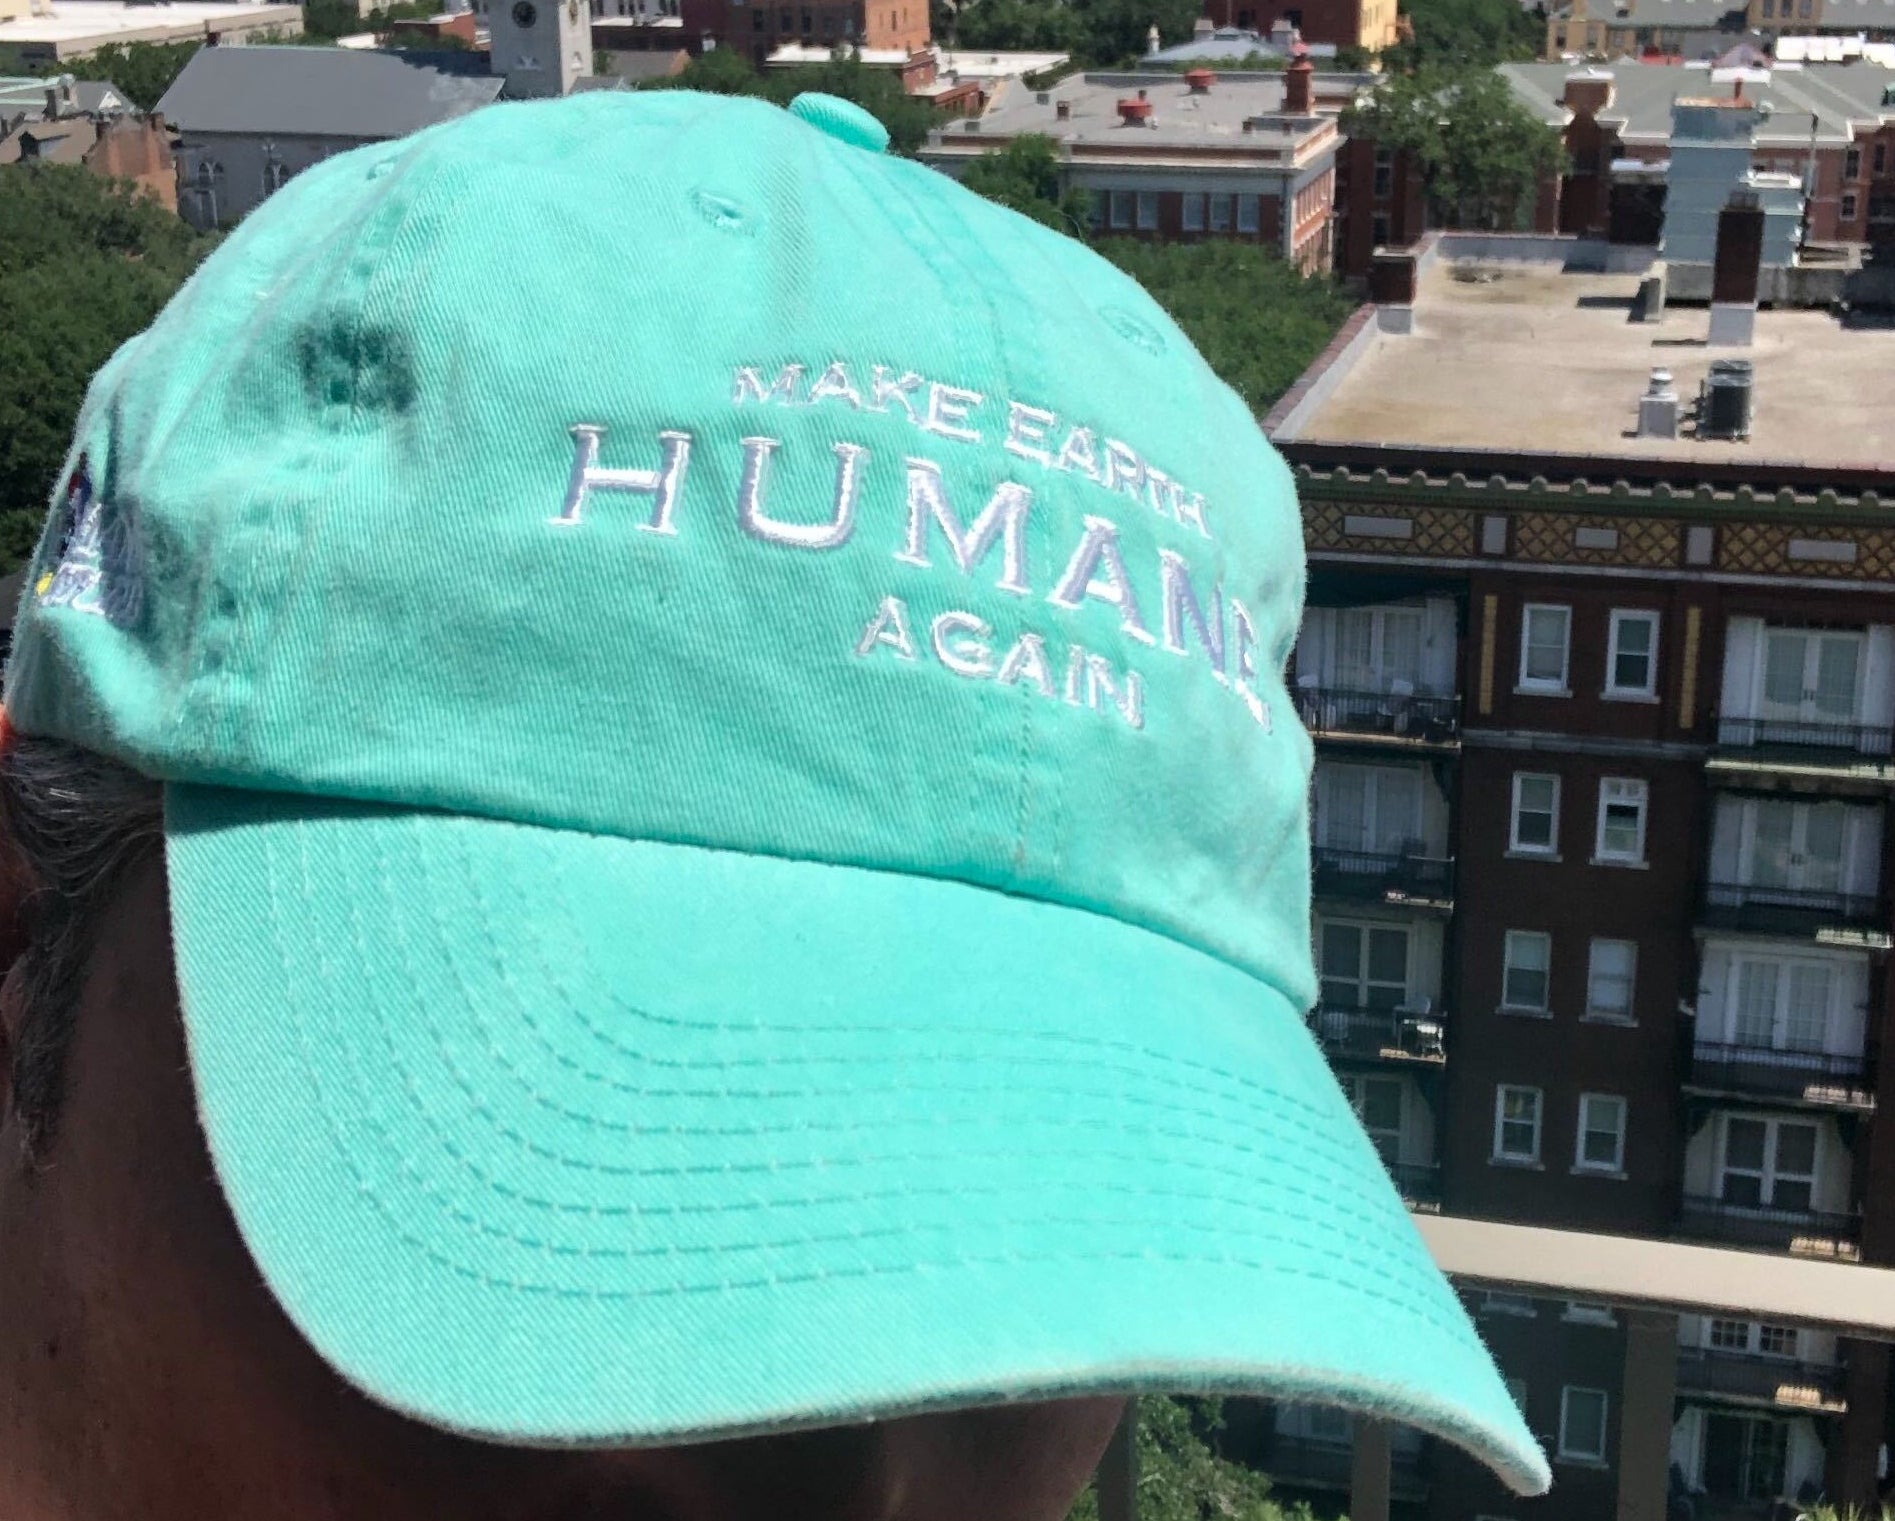 Make Earth Humane Again - Turquoise Transferring